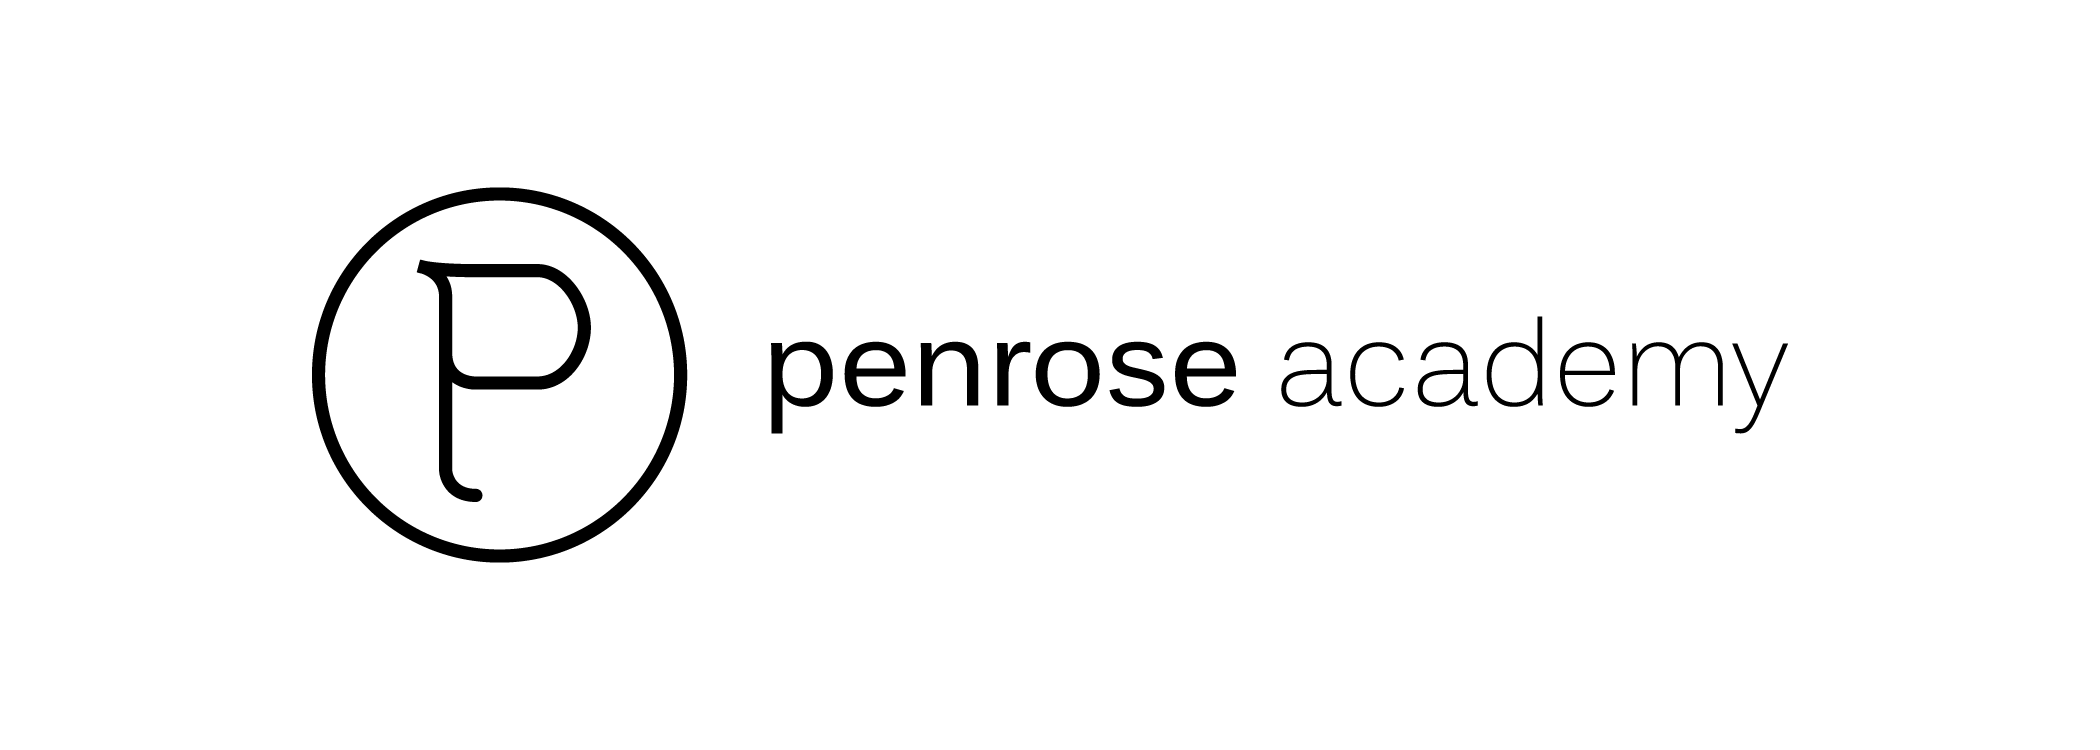 penrose logo